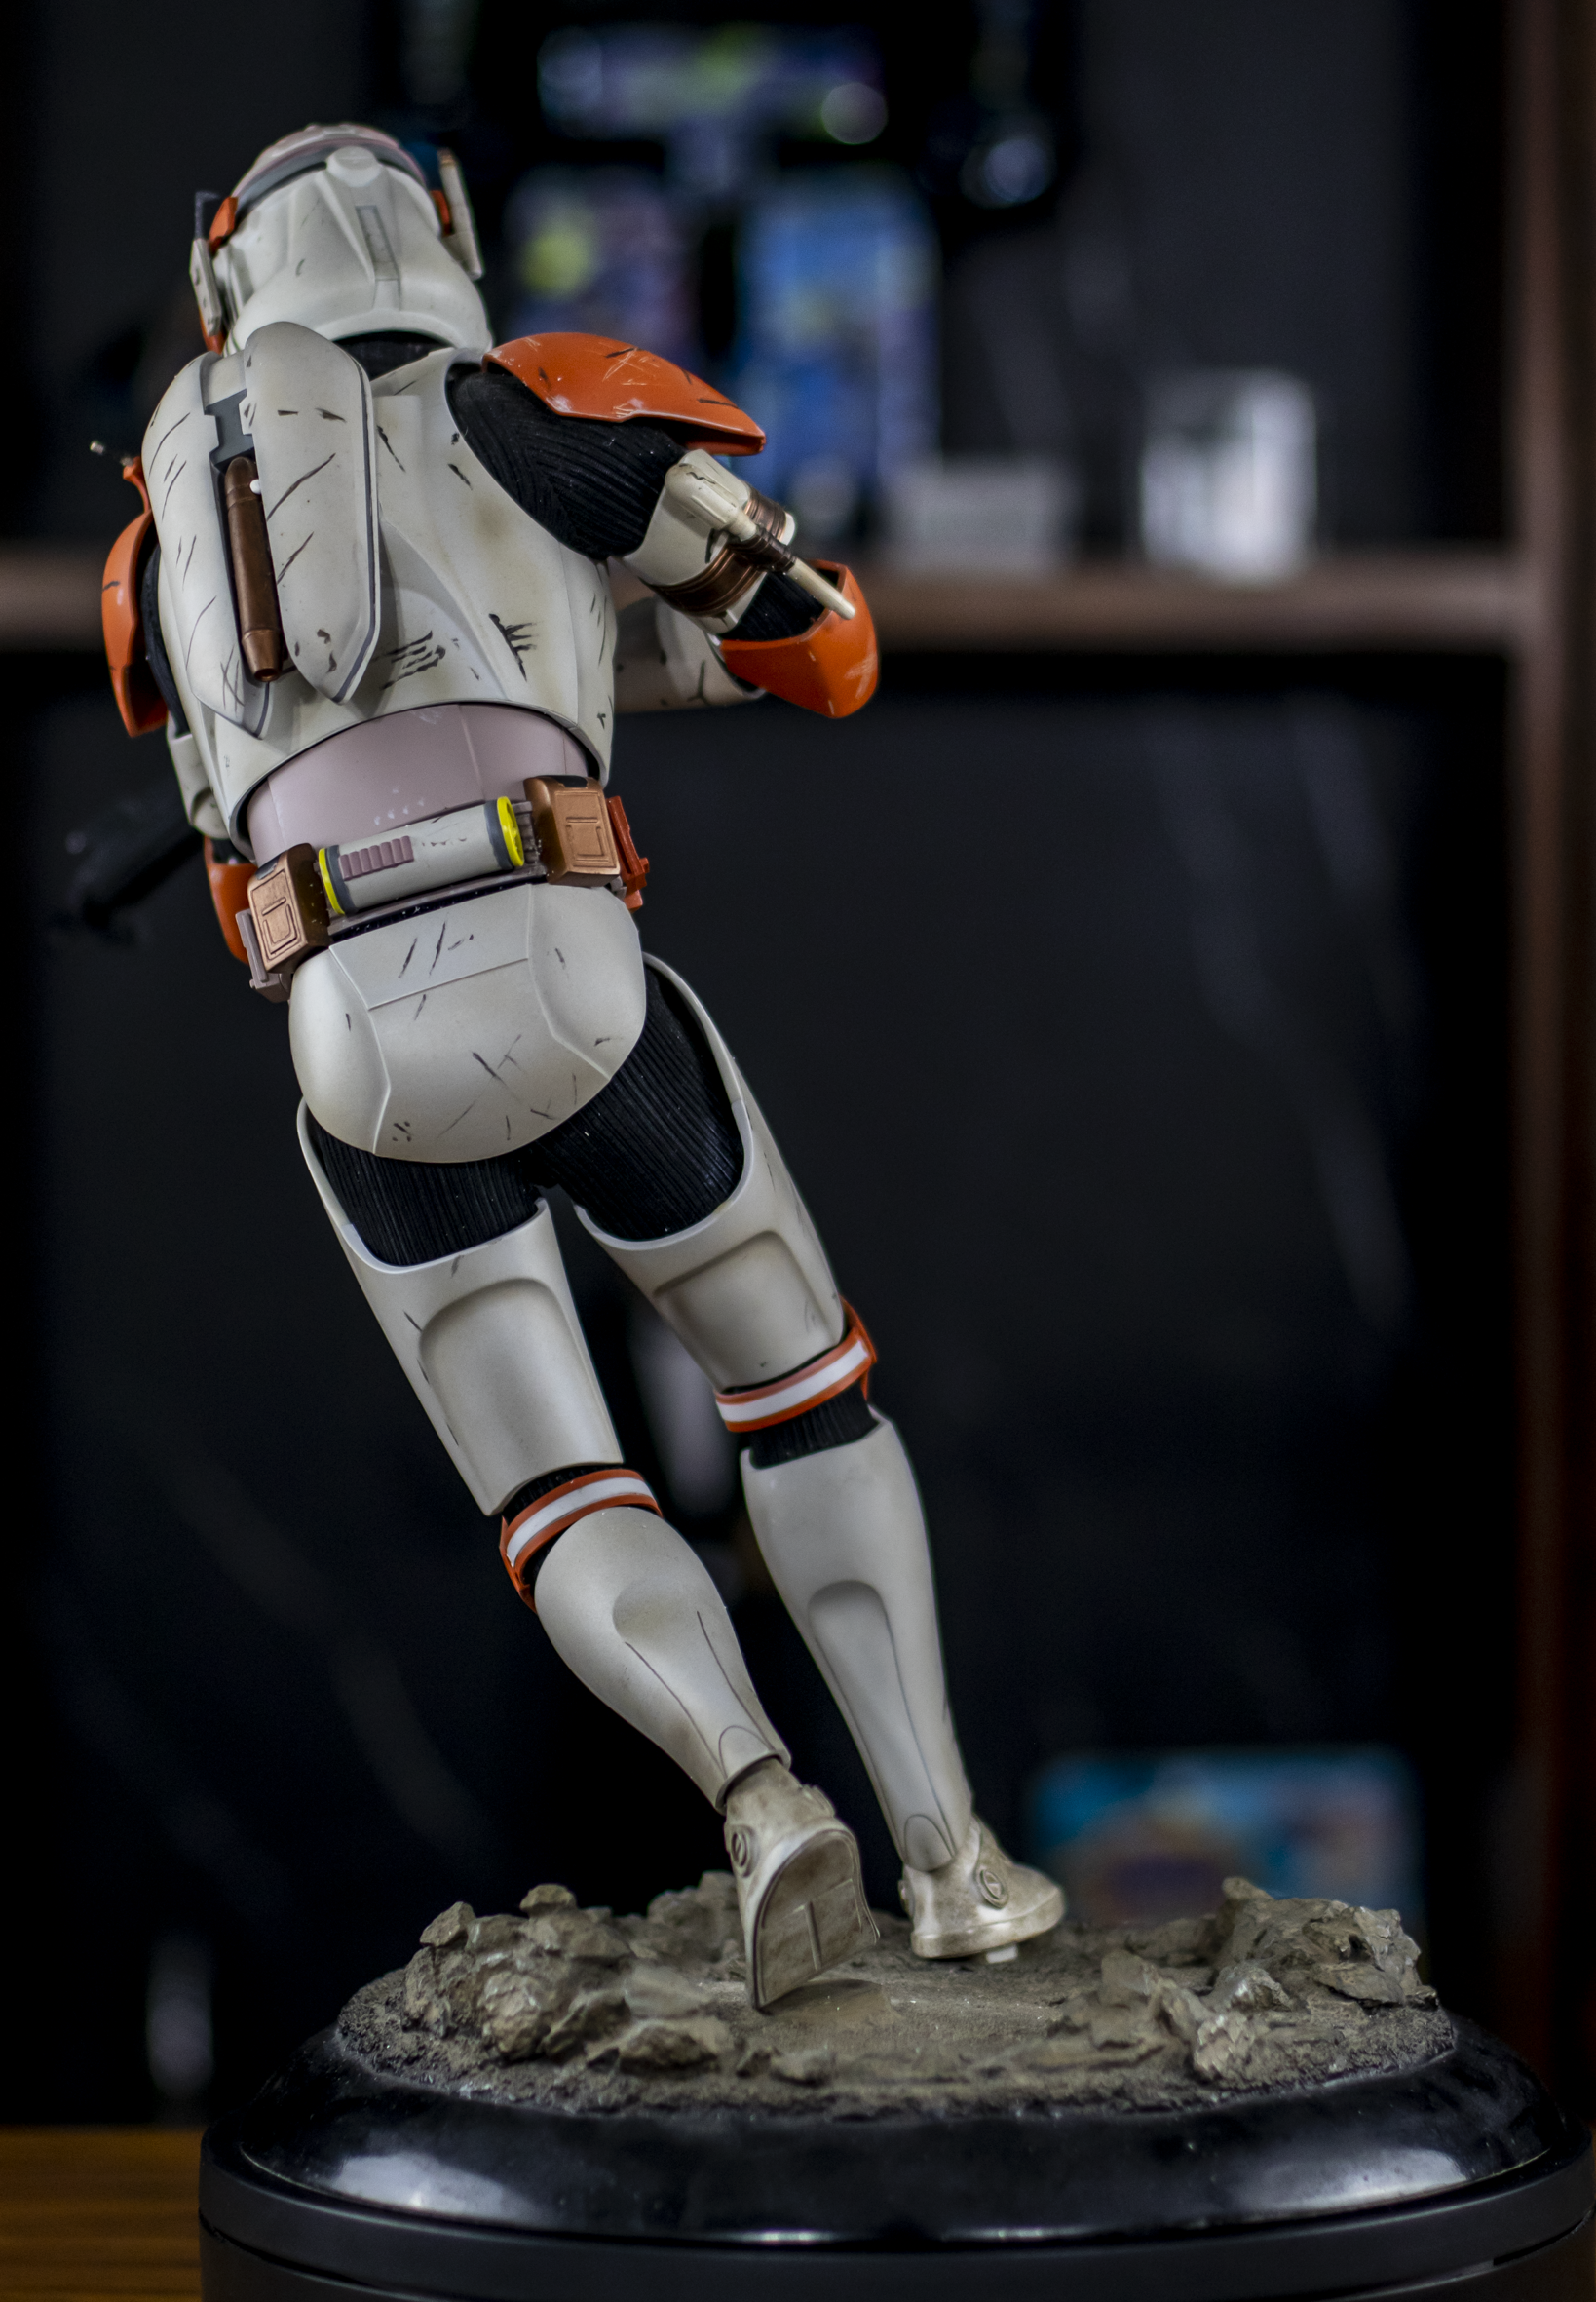 Star Wars: Sideshow "Commander Cody" Premium Format Statue